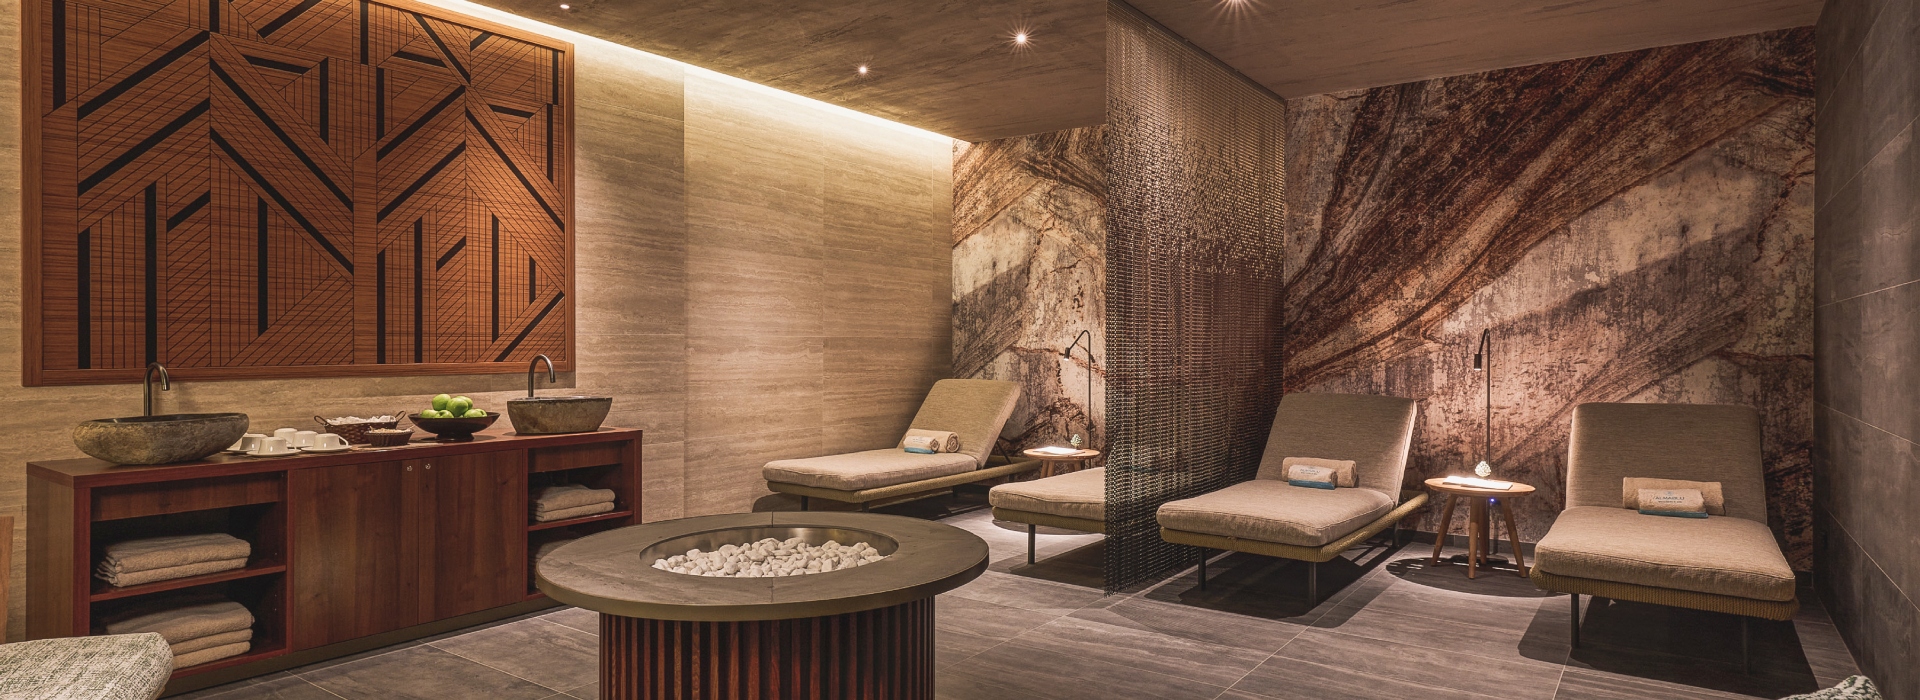 Almar Giardino di Costanza Resort & Spa – An Oasis of Enjoyment, Luxury, and Refined Design